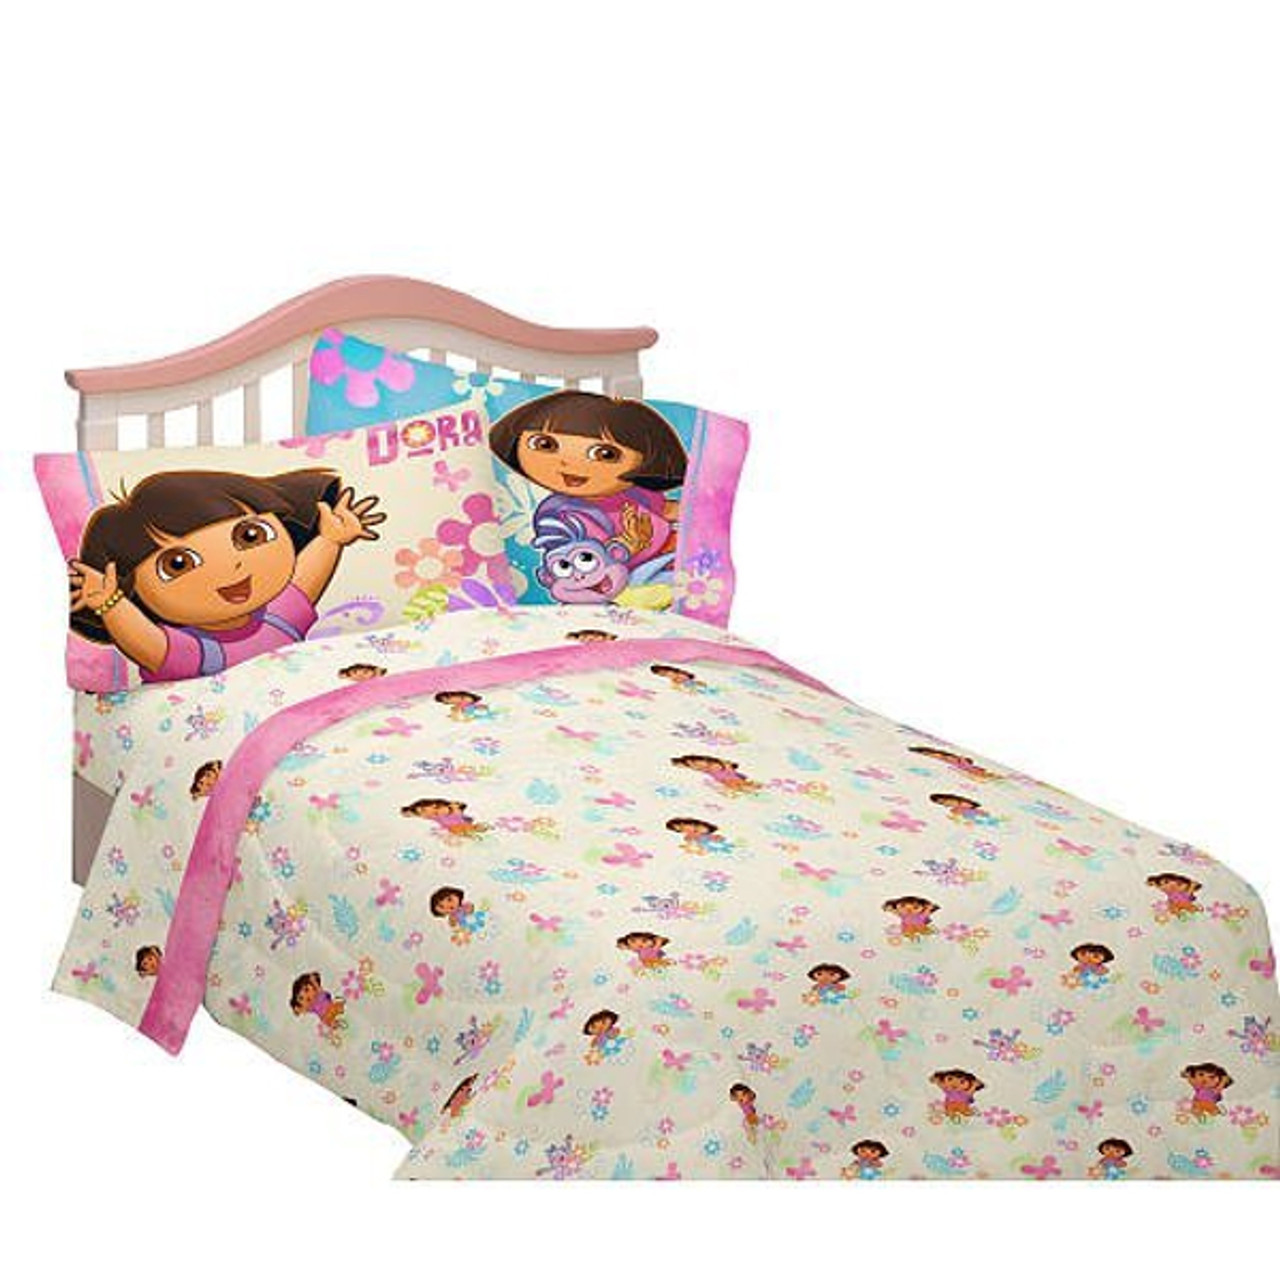 Excelent dora bedding set twin Nickelodeon Dora The Explorer Exploring Together Full Sheet Set Kids Whs